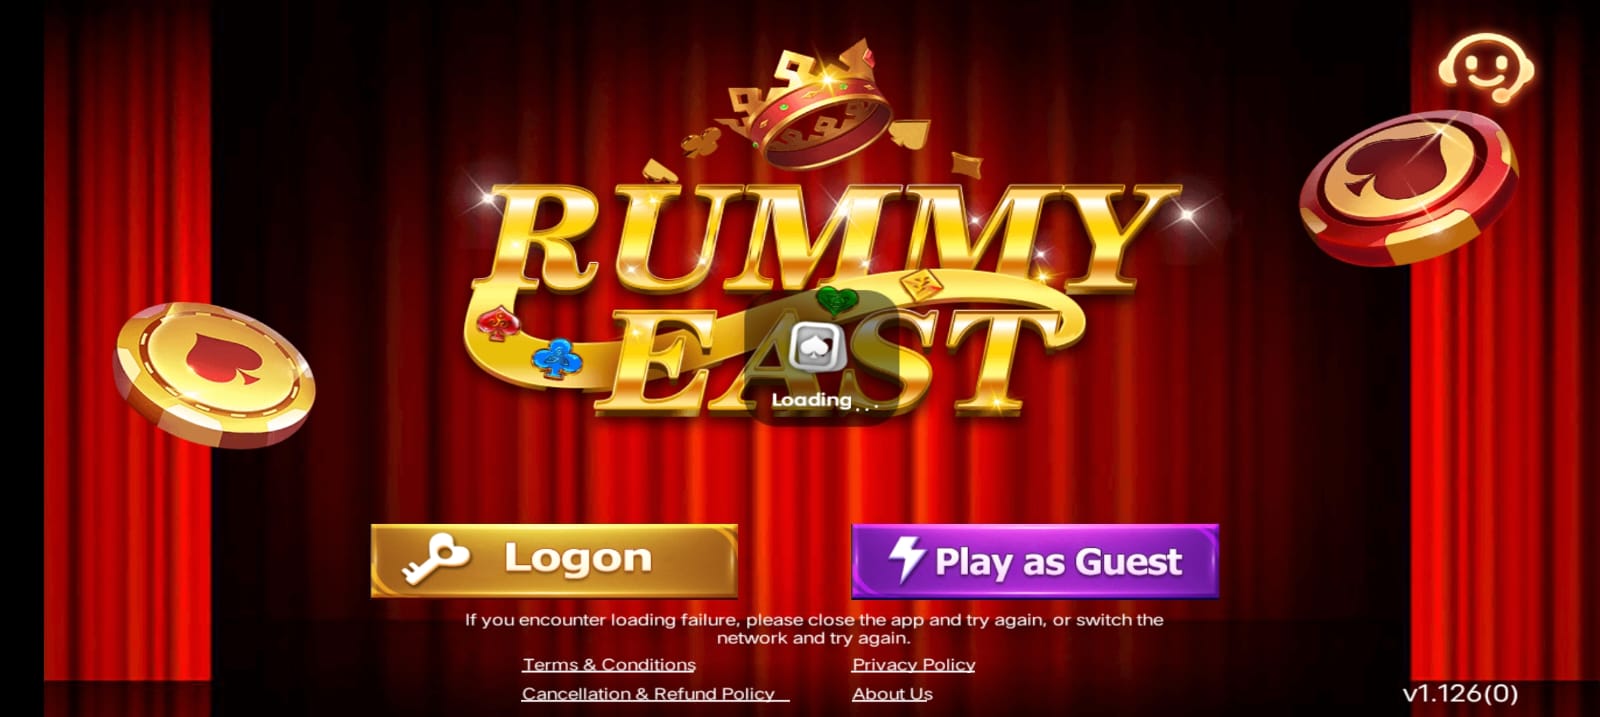 Create Account In "Rummy East" Apk